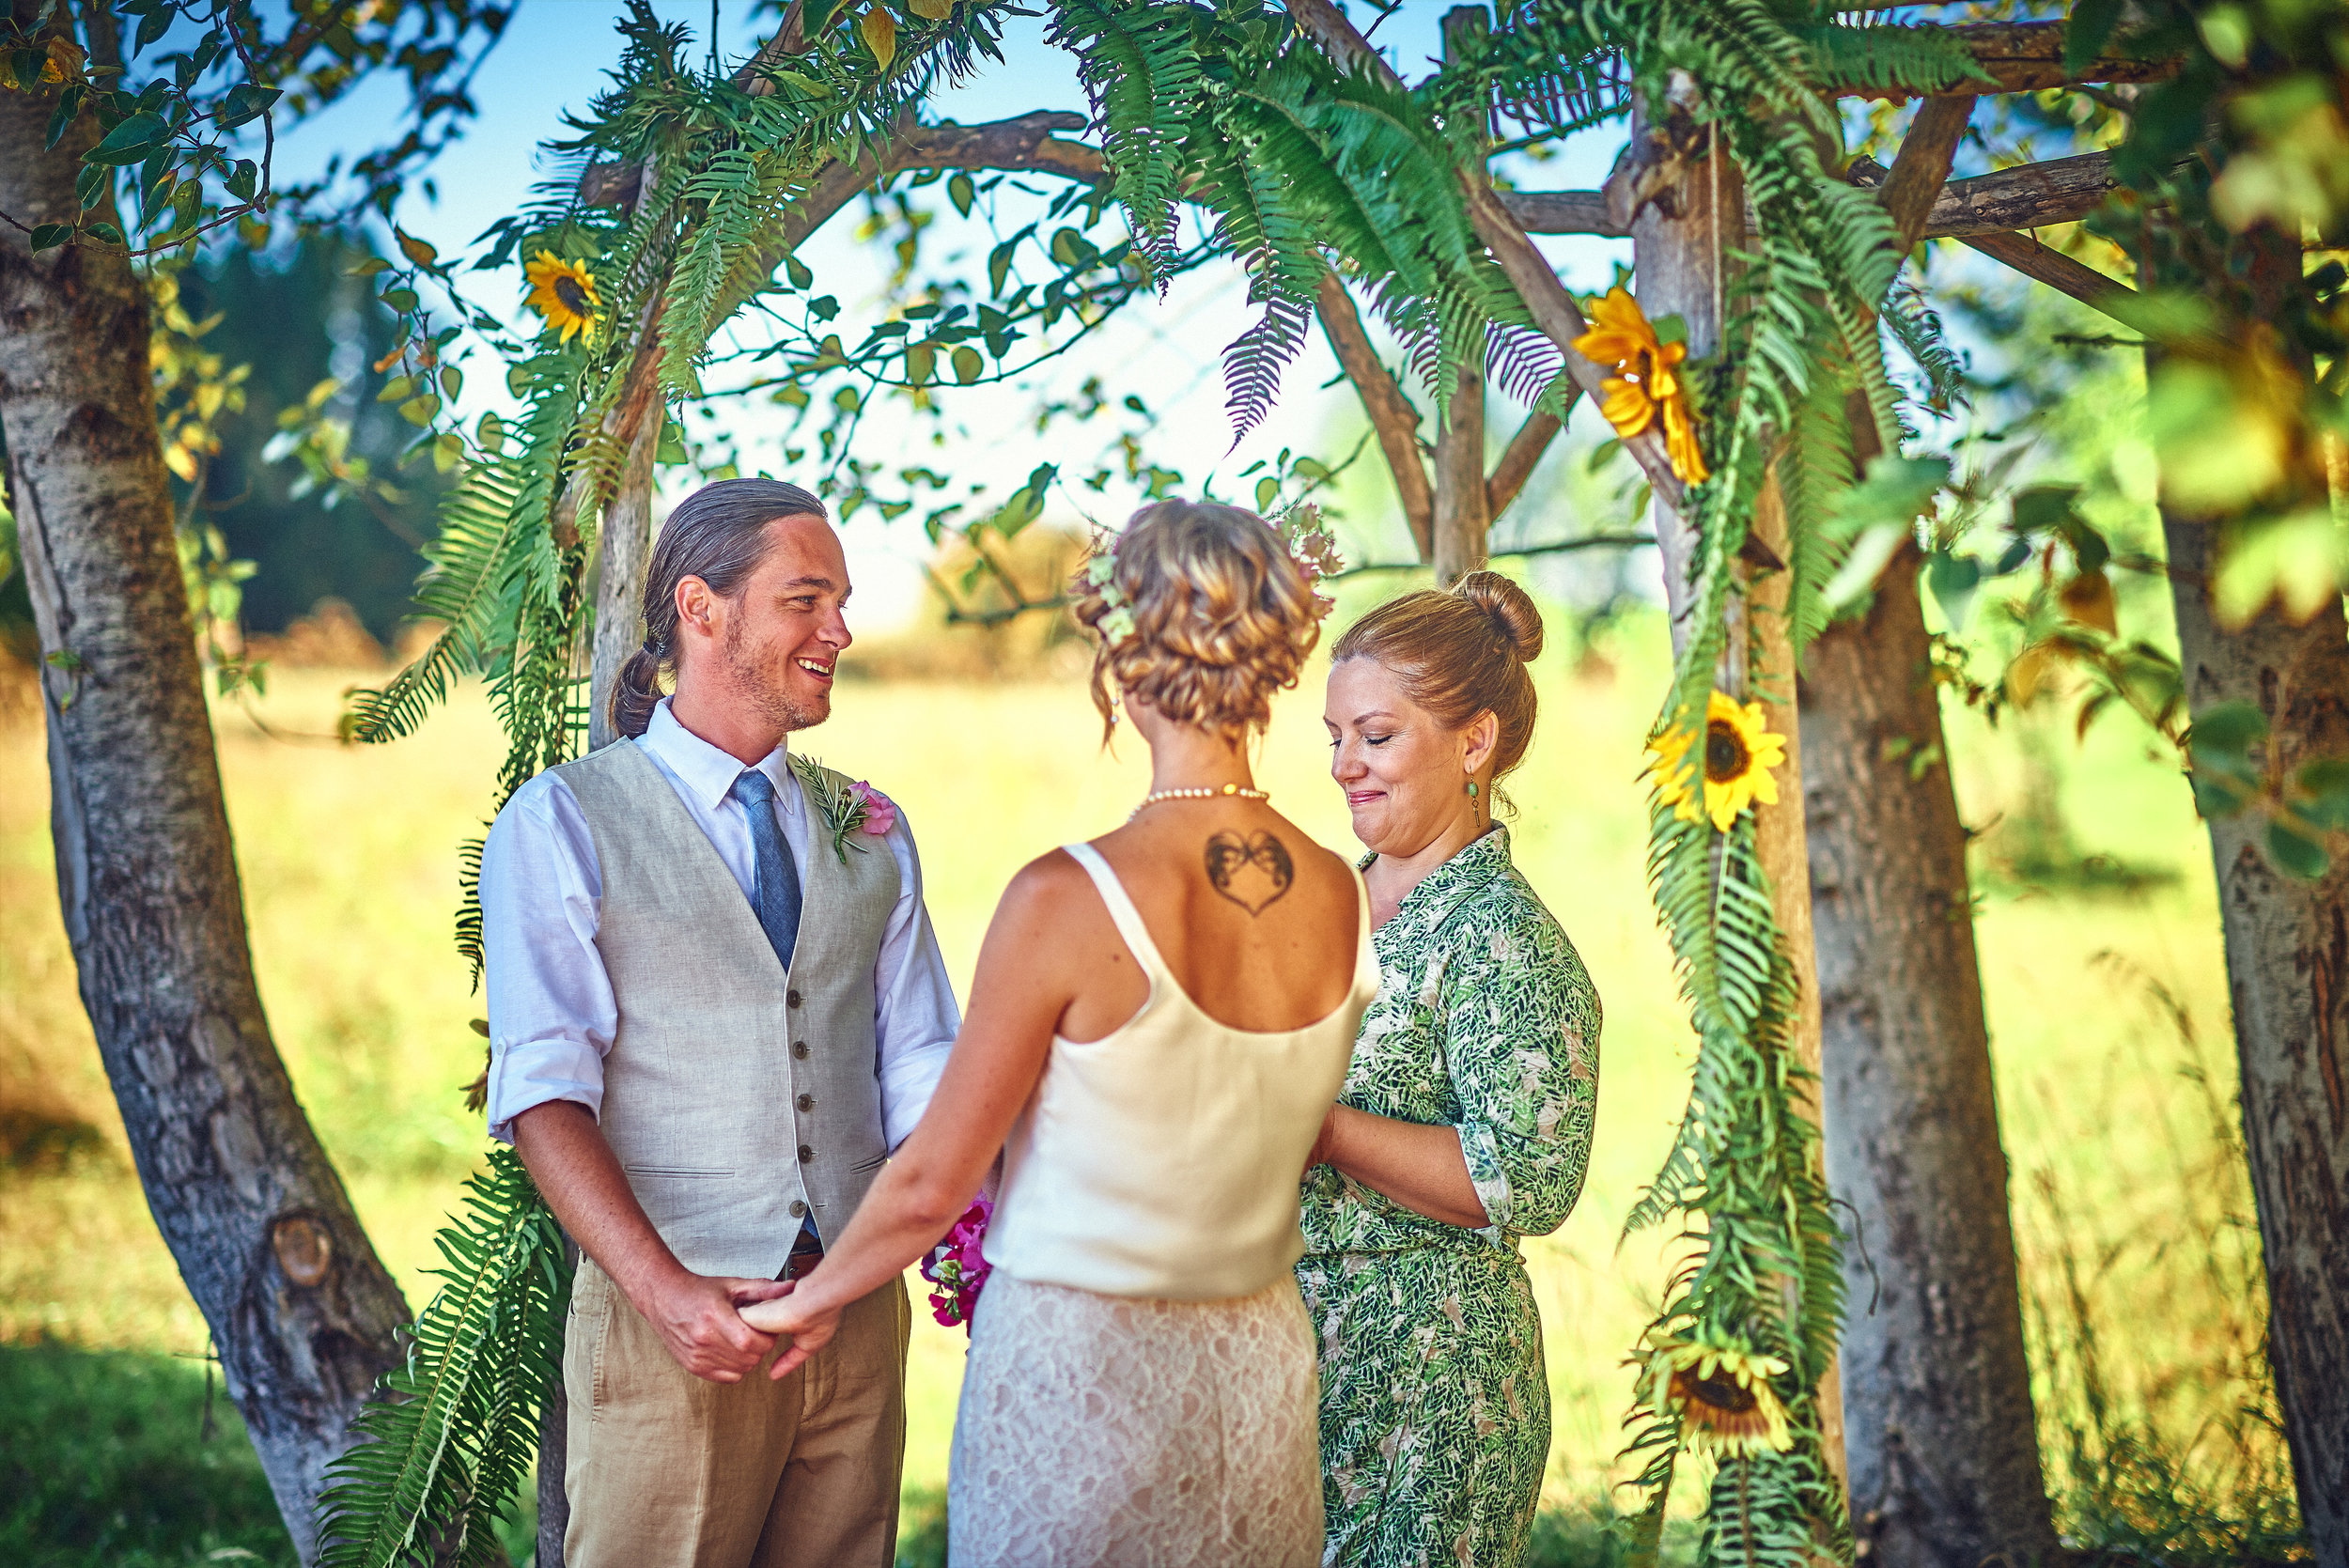 plum nelli farm wedding with arbor ferns and sunflowers farm wedding decor.jpg